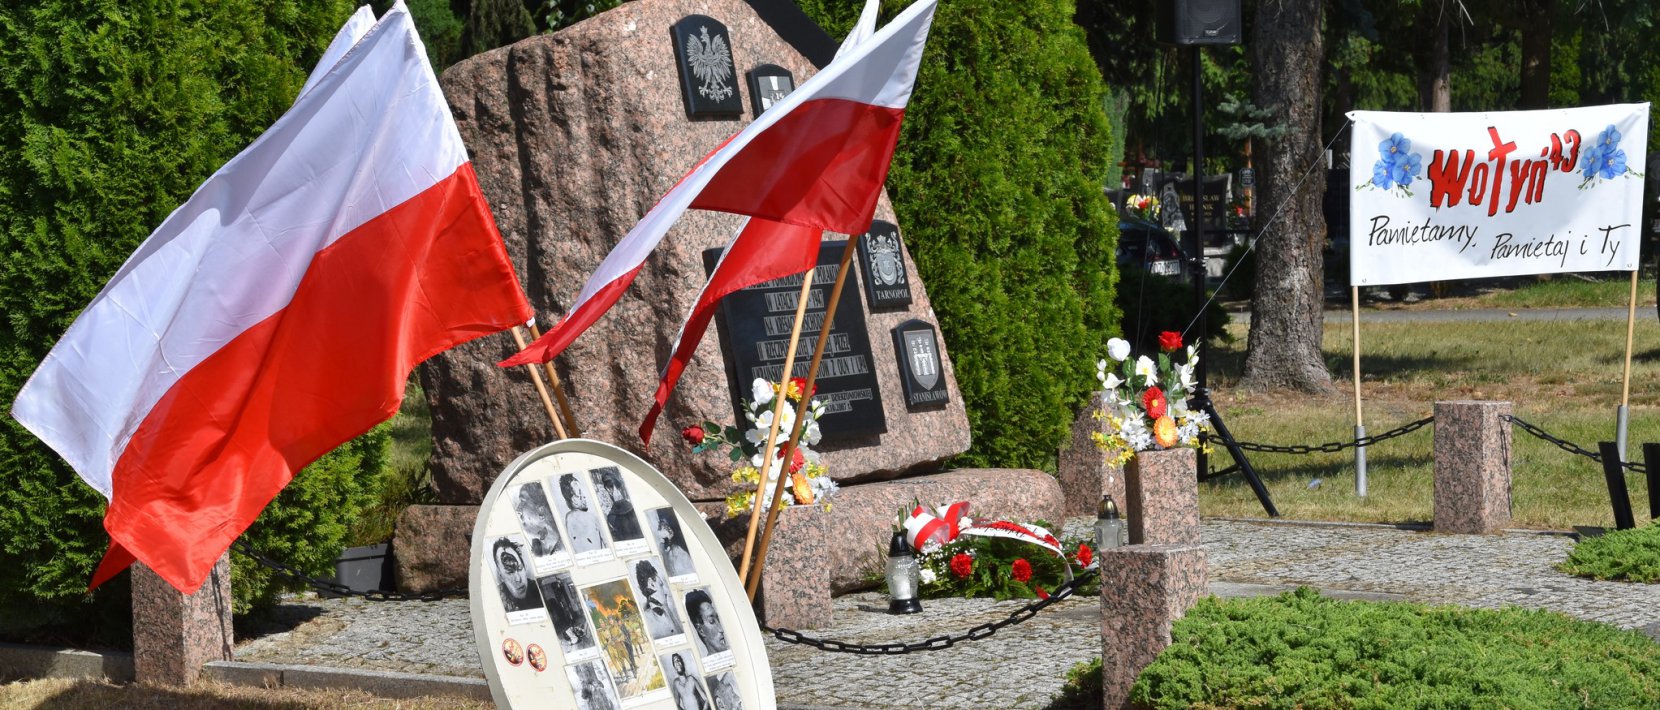 Kamienny obelisk na cmentarzu, obo0k dwie flagi Polski